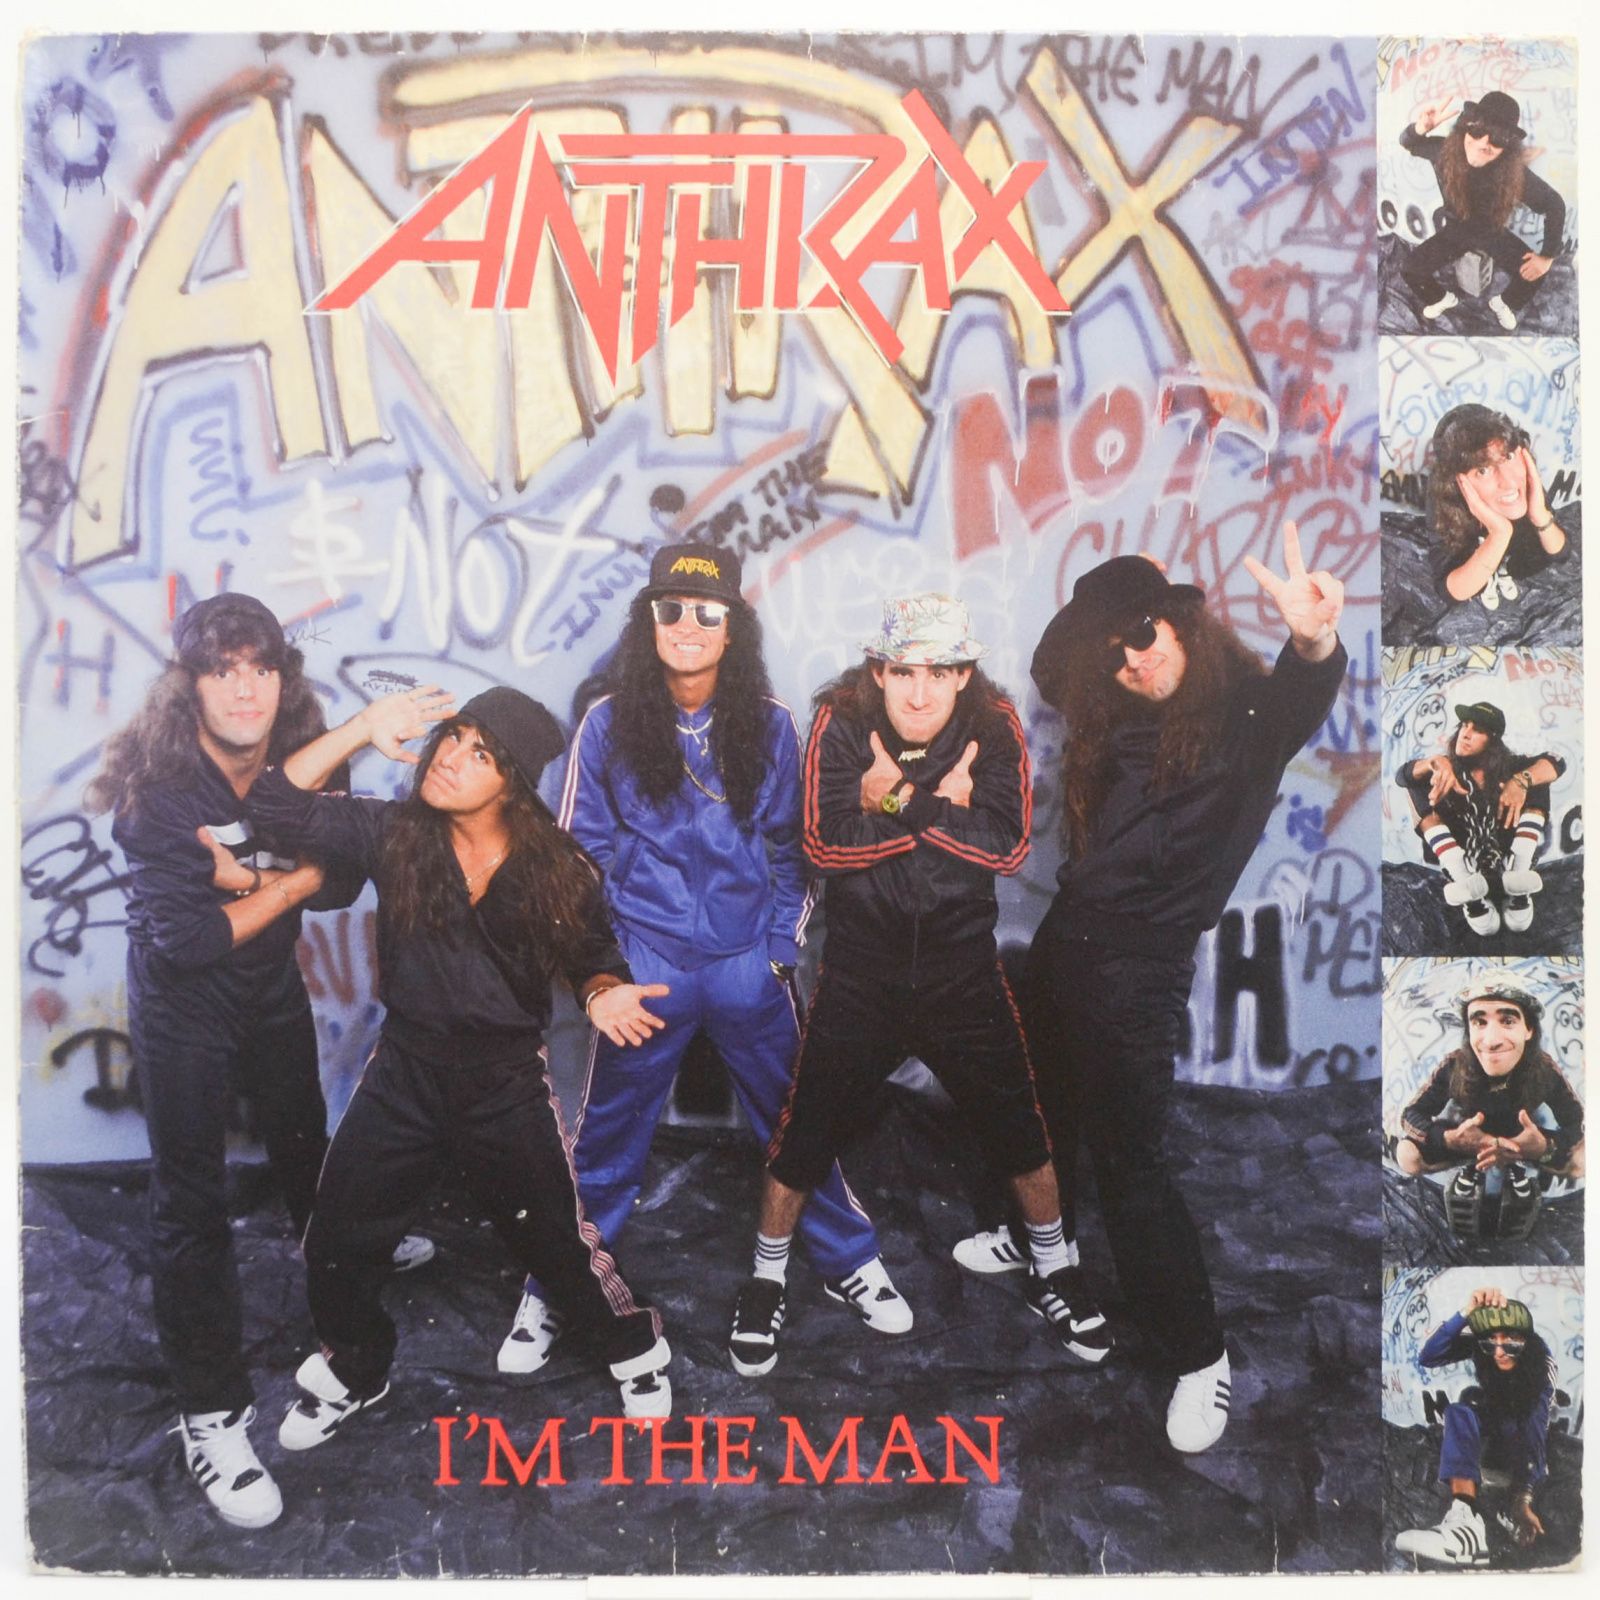 Anthrax — I'm The Man, 1987